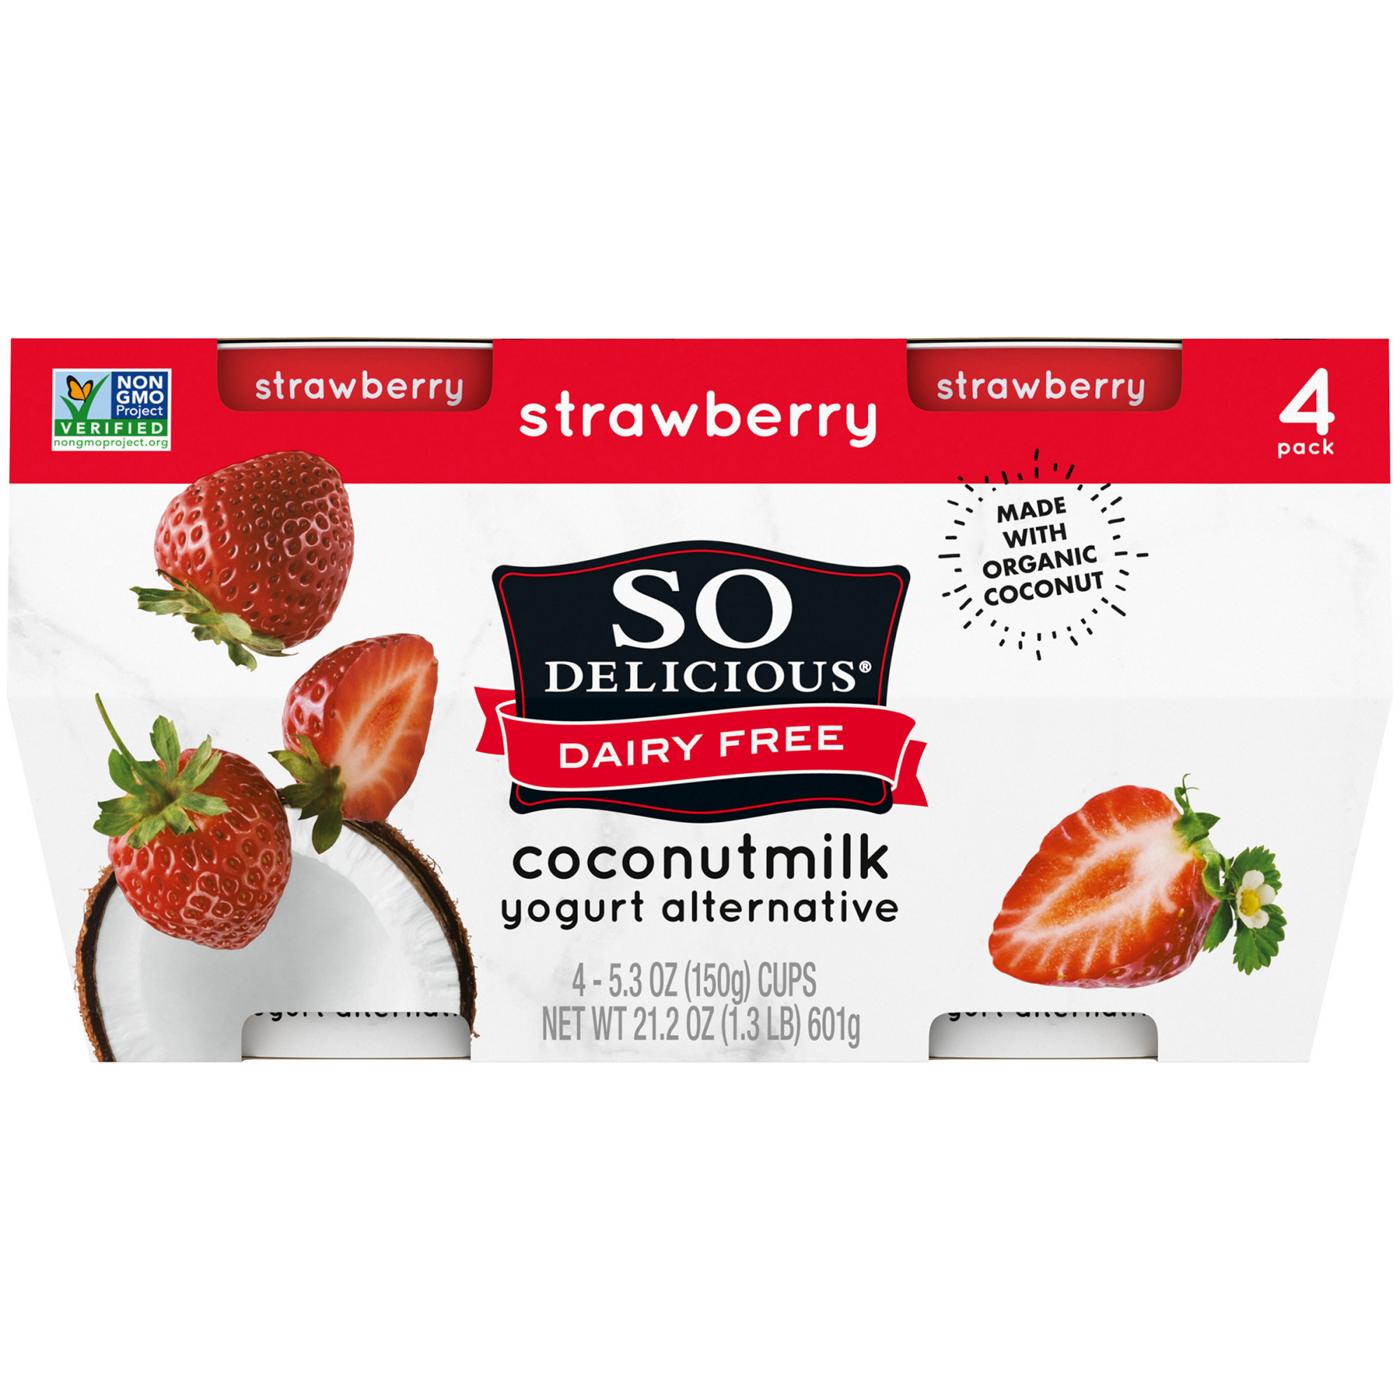 So Delicious Dairy Free Strawberry Coconutmilk Yogurt; image 2 of 3